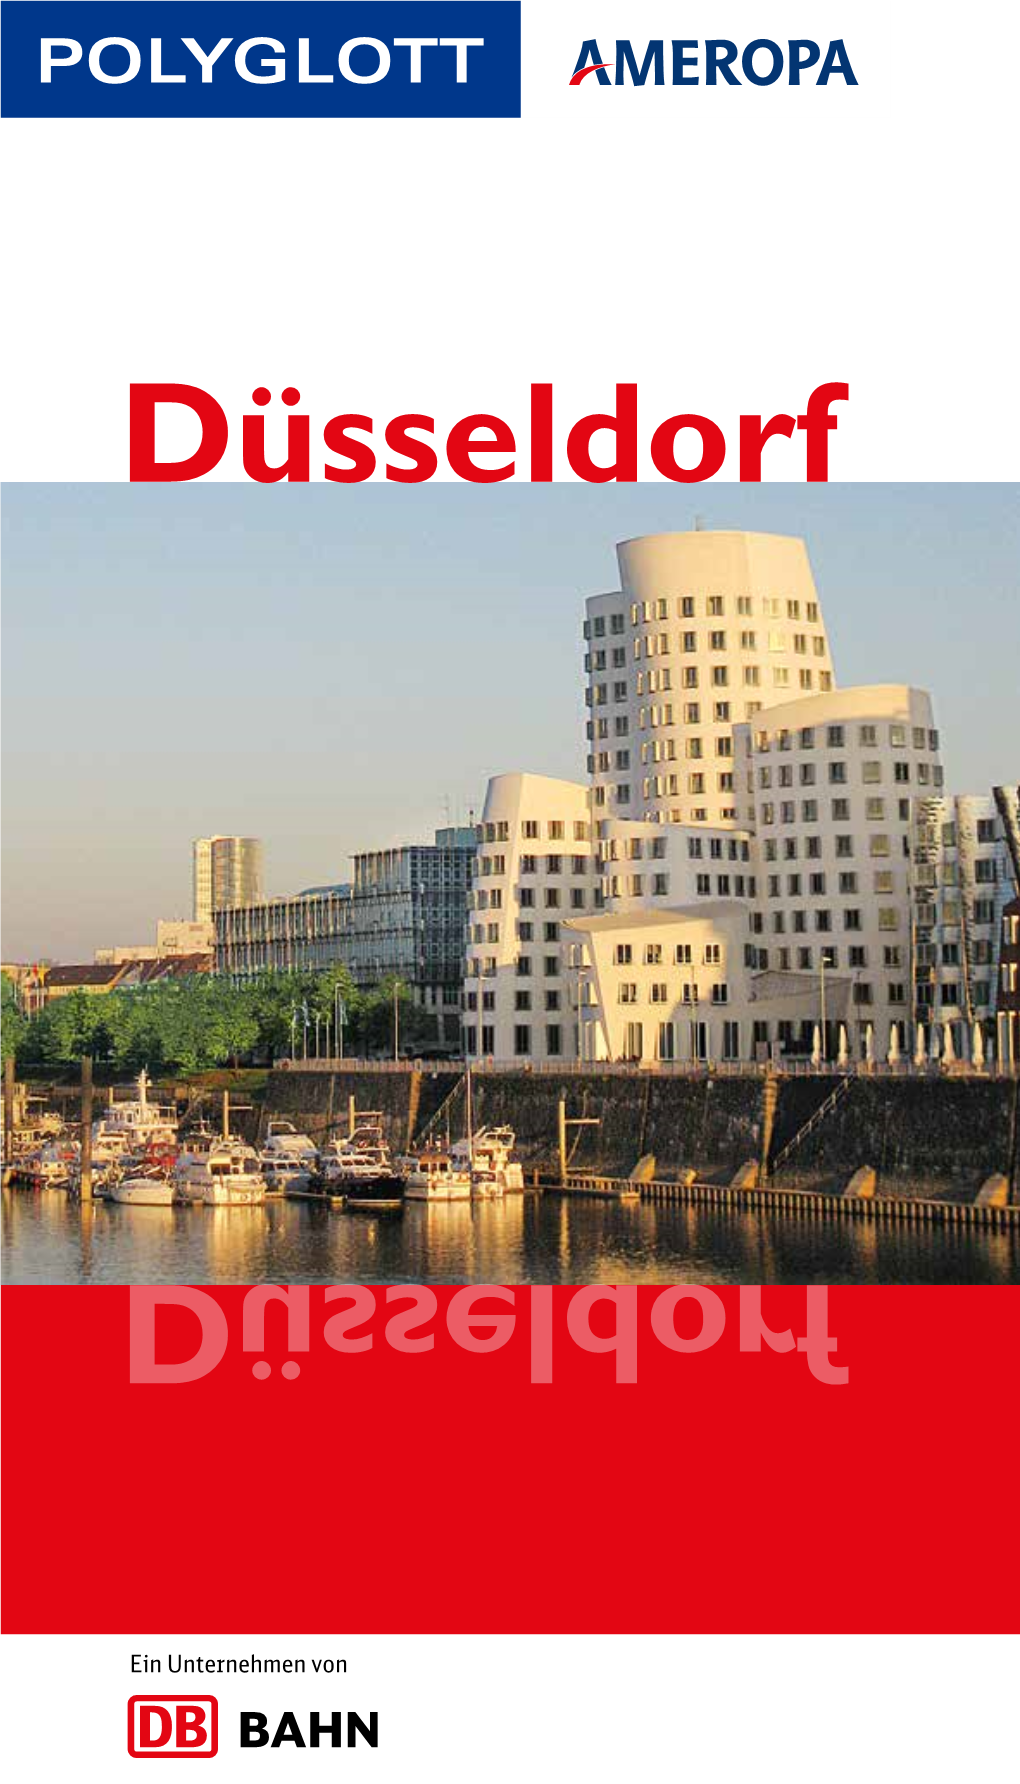 Düsseldorf Düsseldorf